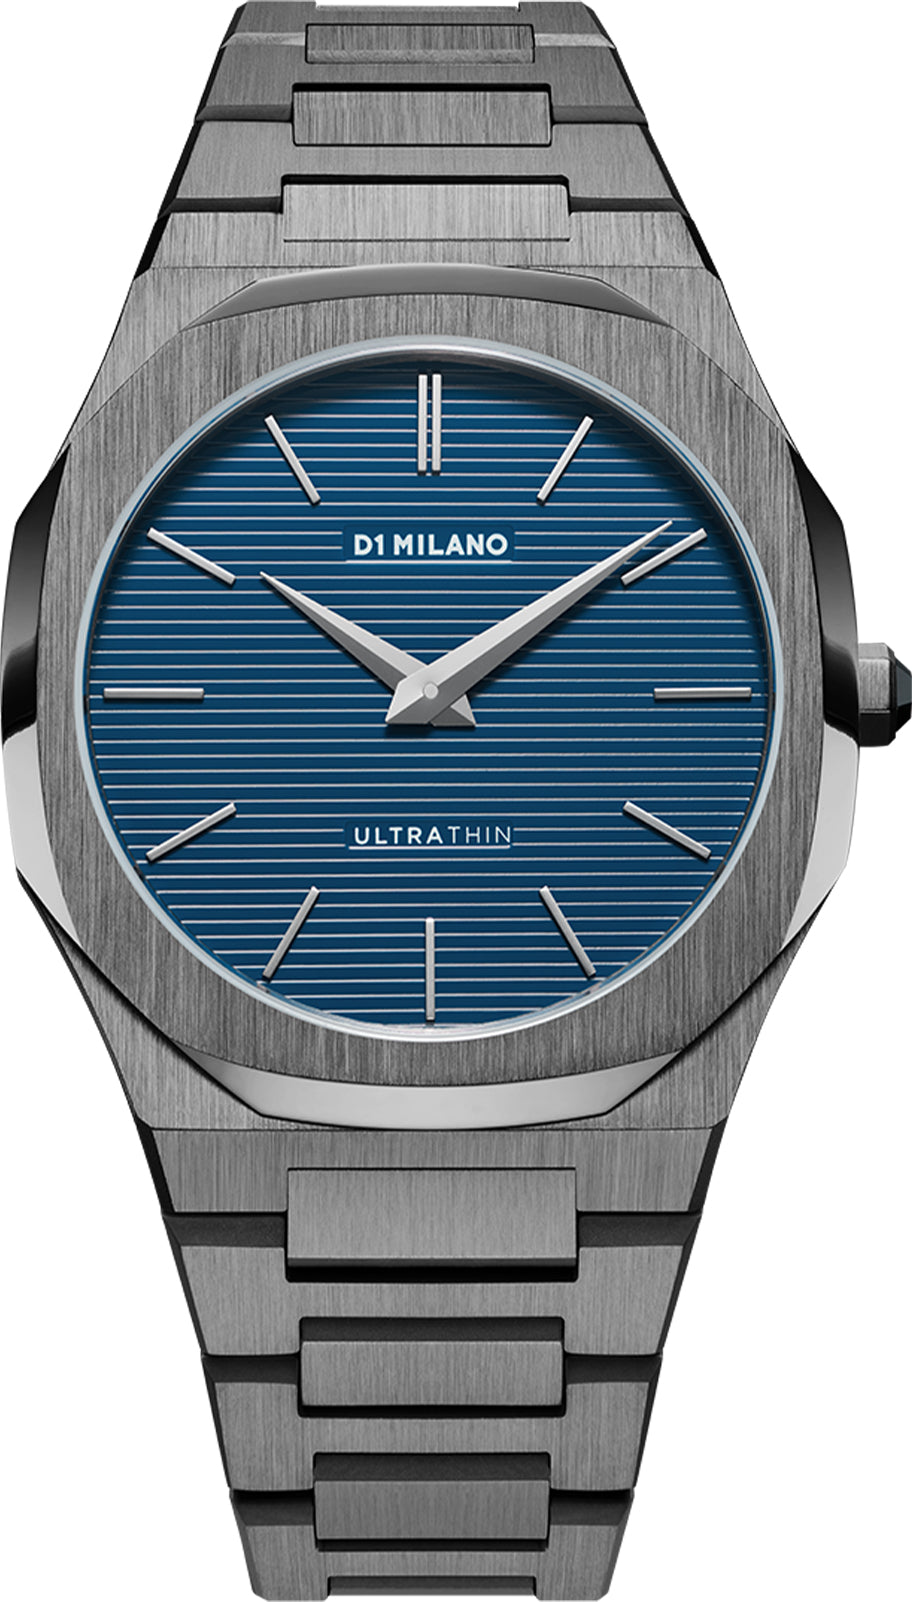 Photos - Wrist Watch Milano D1  Watch Ultra Thin DLM-030 